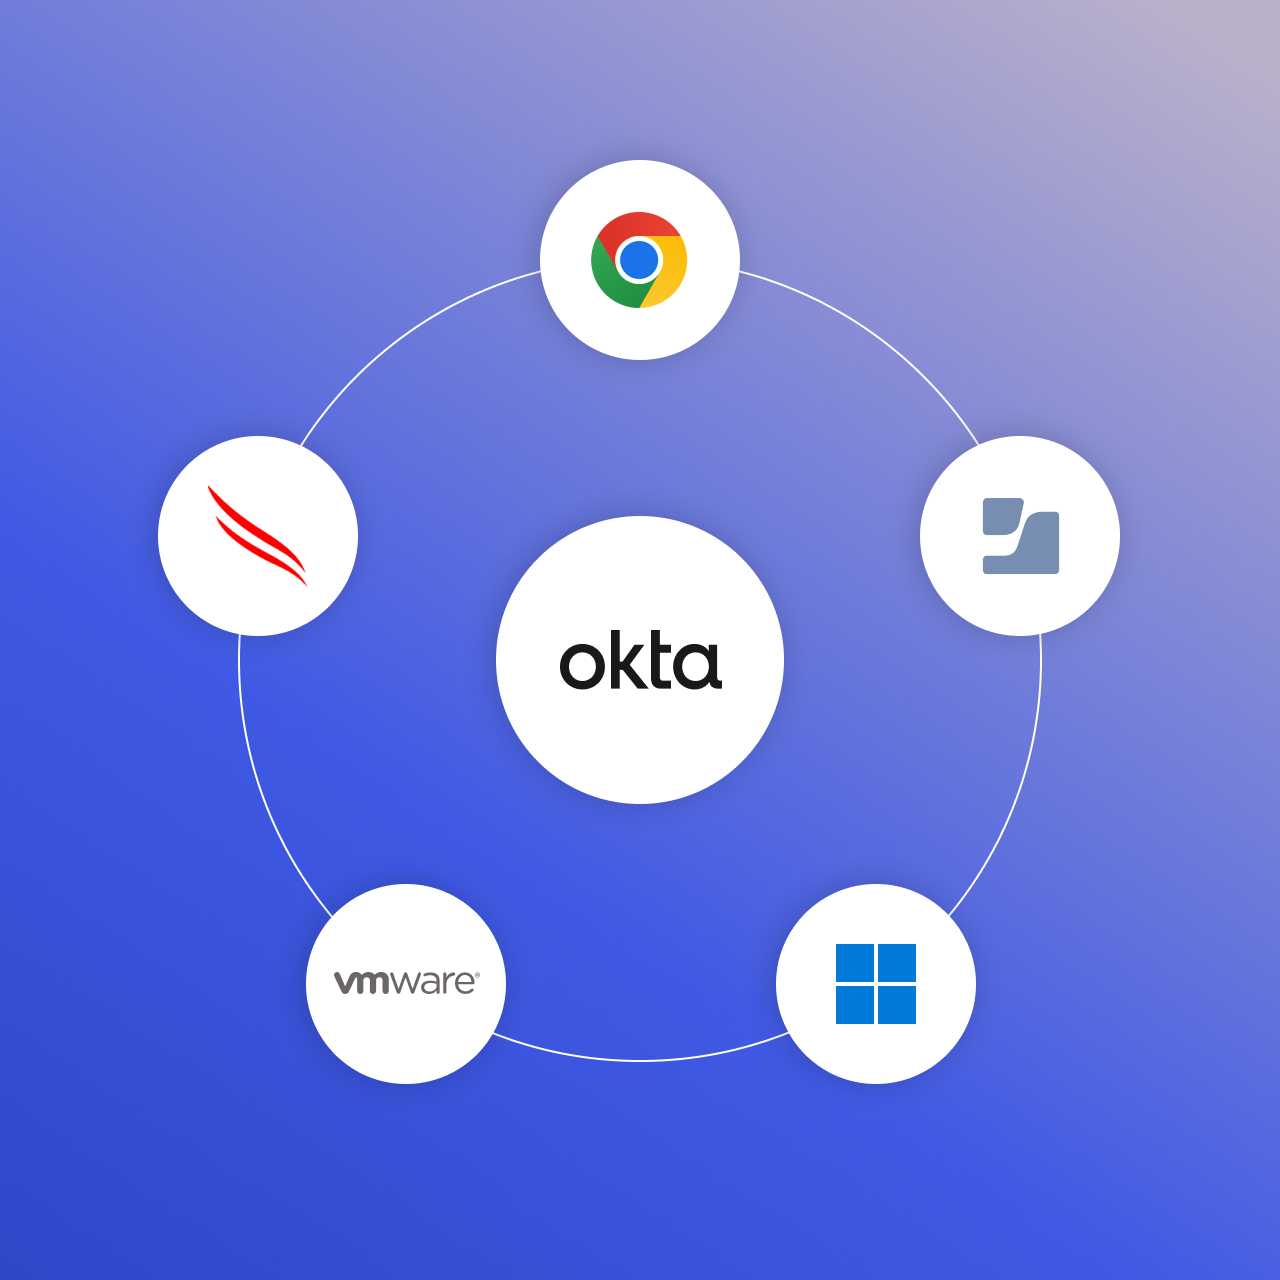  A circle of brand logos with Okta at the center.